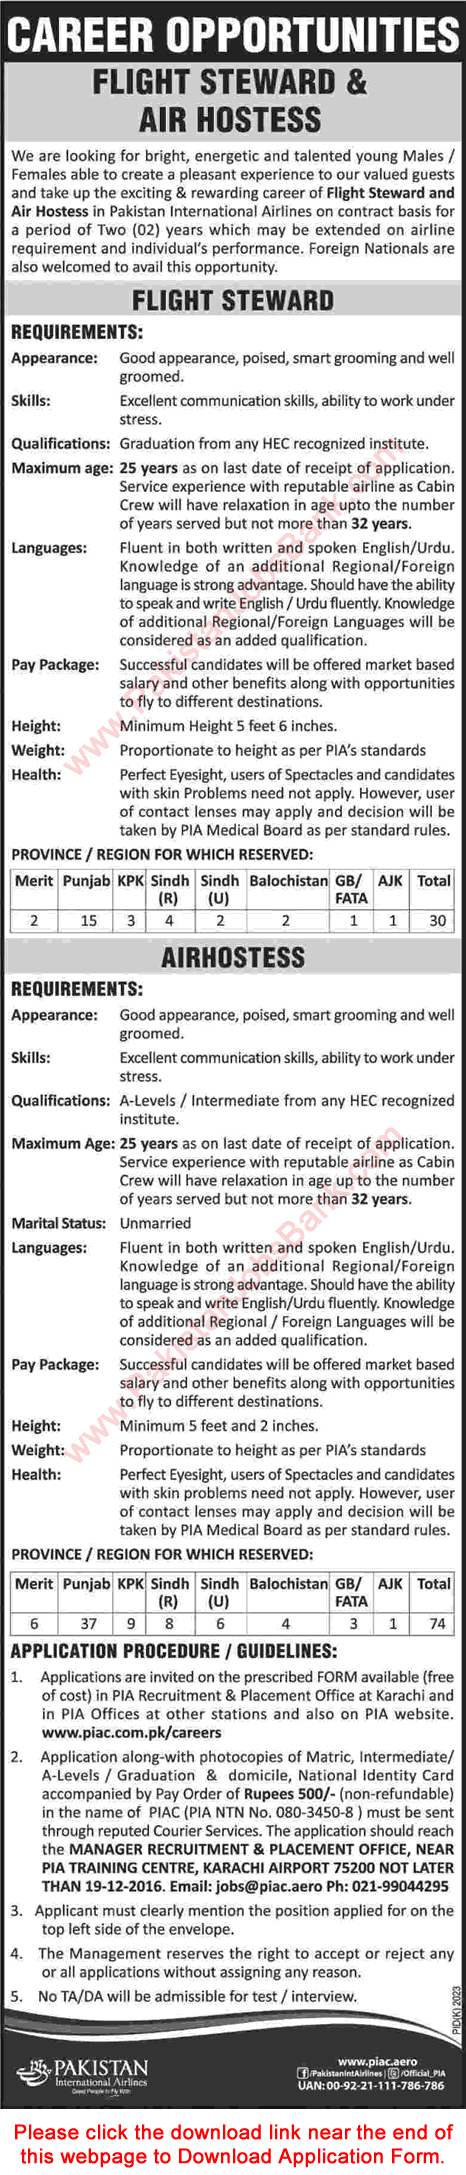 PIA Jobs December 2016 Air Hostess & Flight Stewards Application Form Download Latest